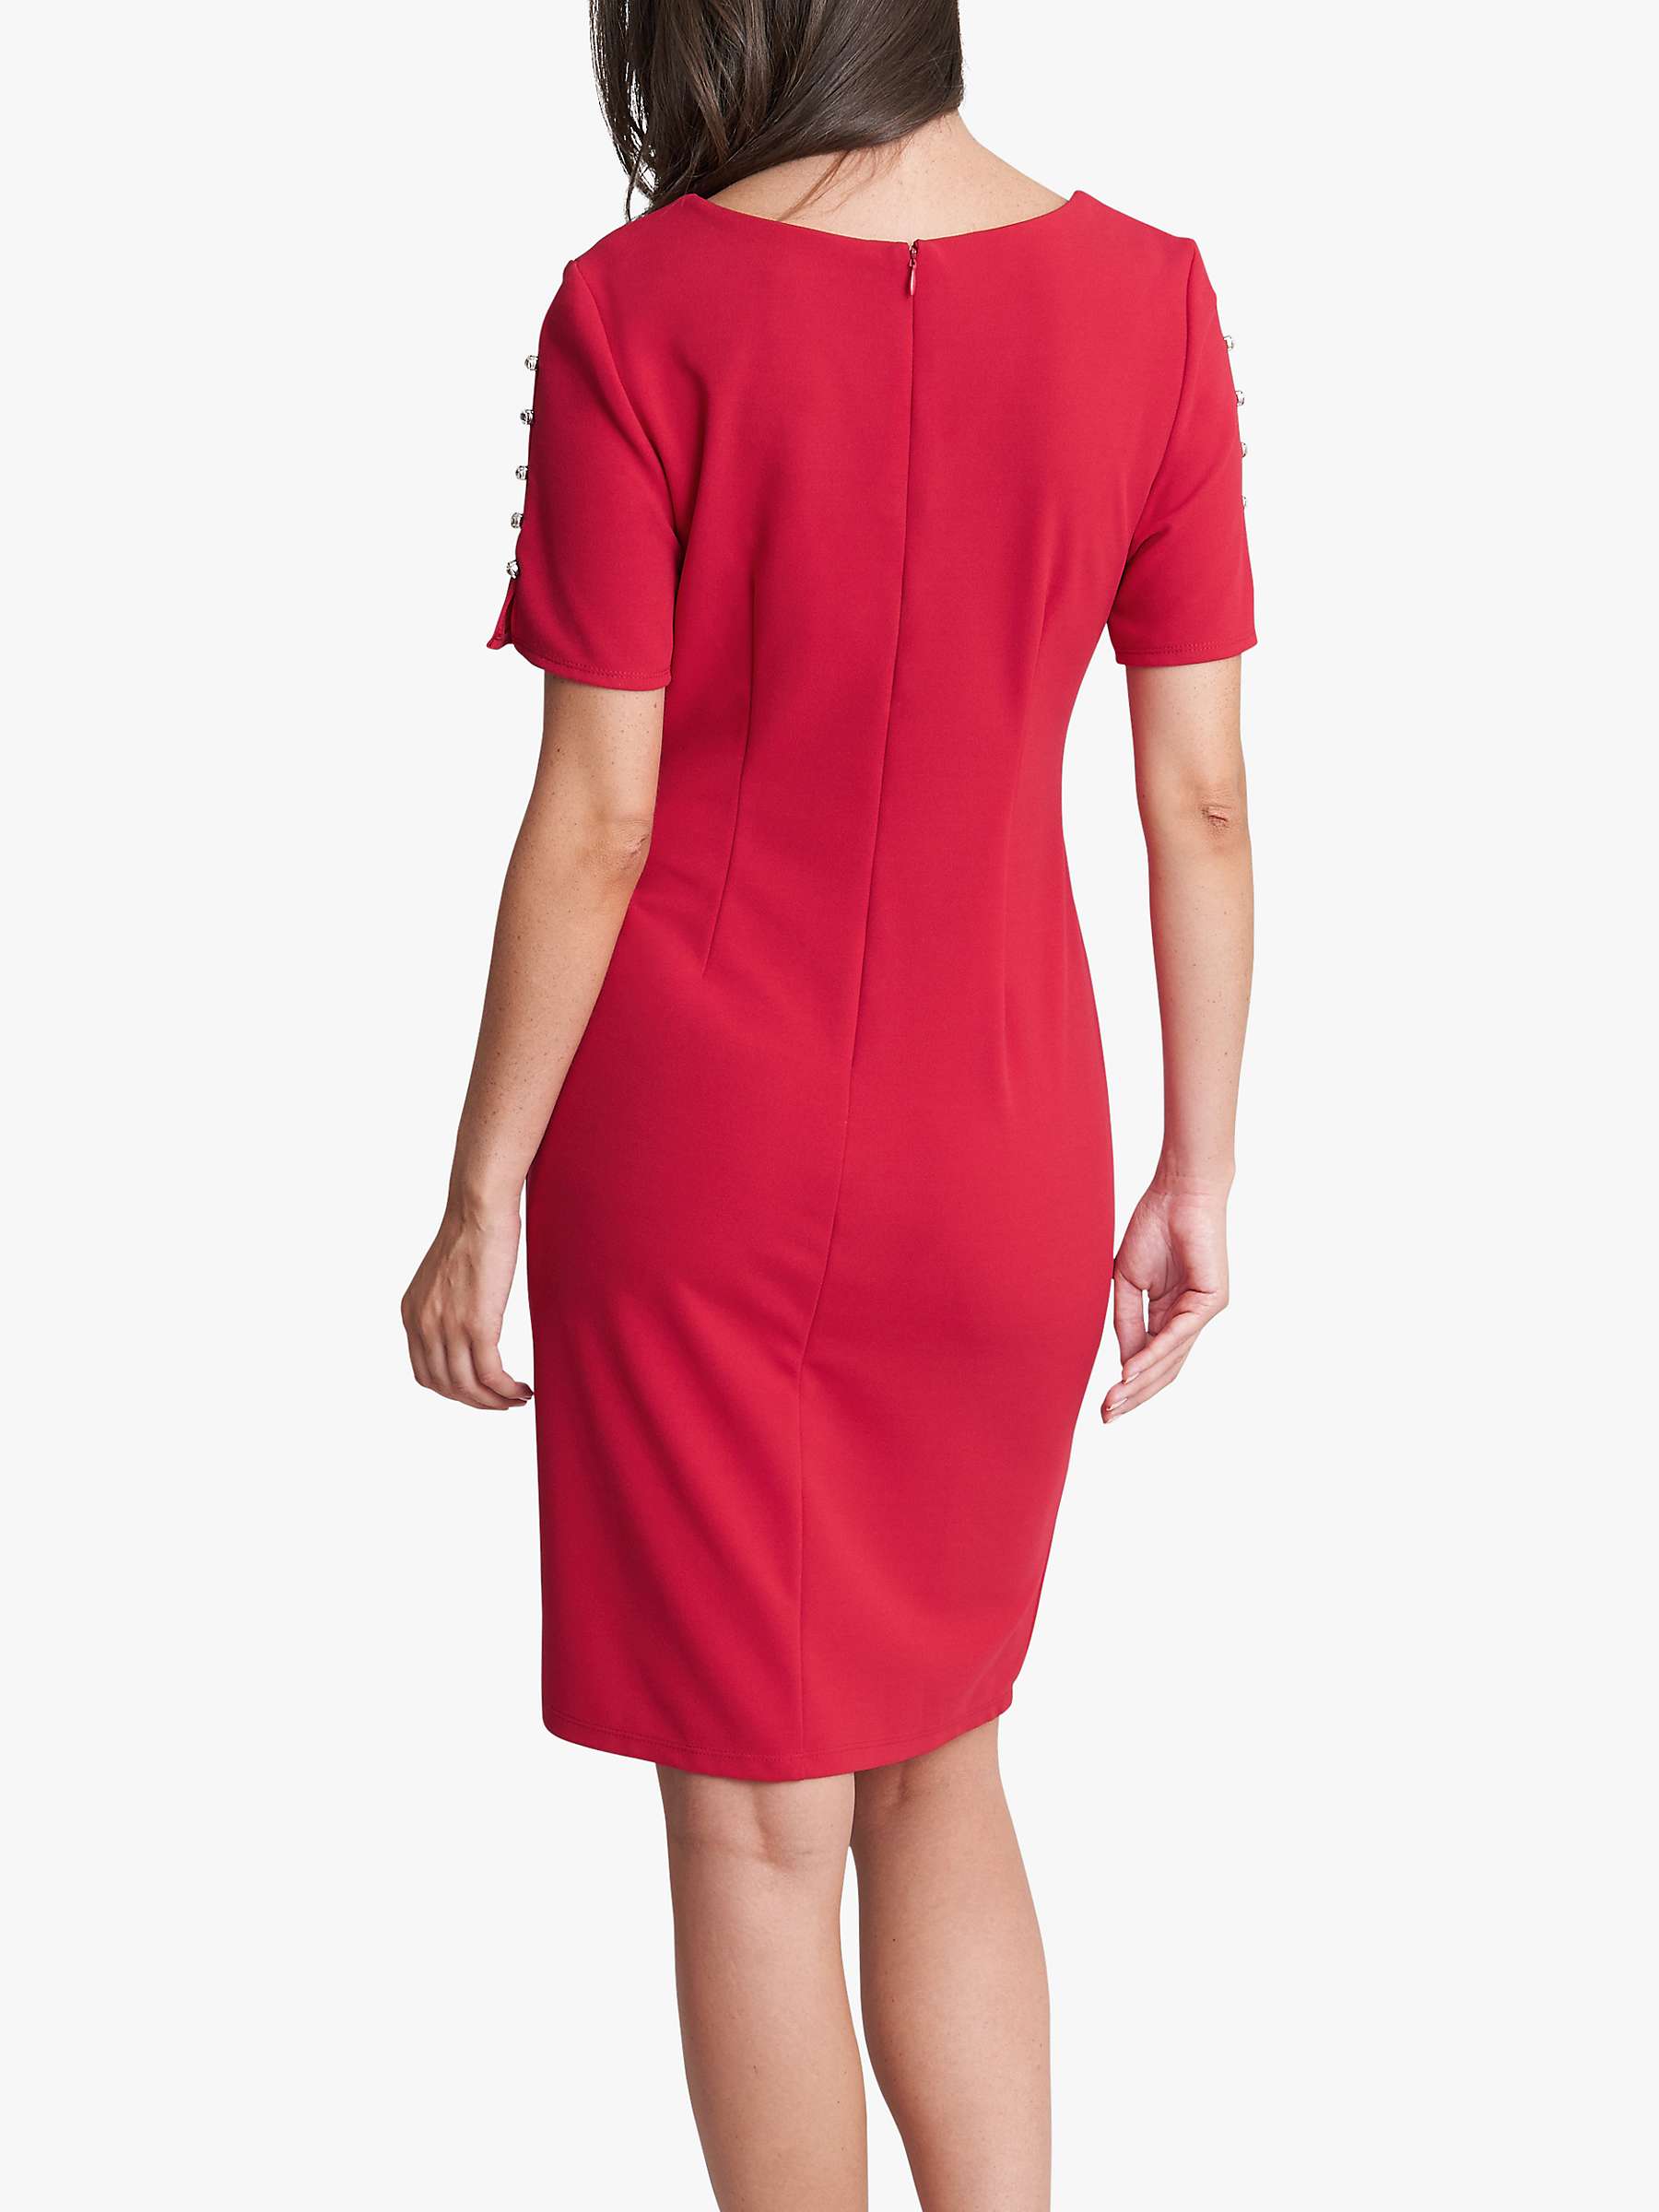 Buy Gina Bacconi Reid Embellished Sleeve Stretch Crepe Dress, Red Online at johnlewis.com